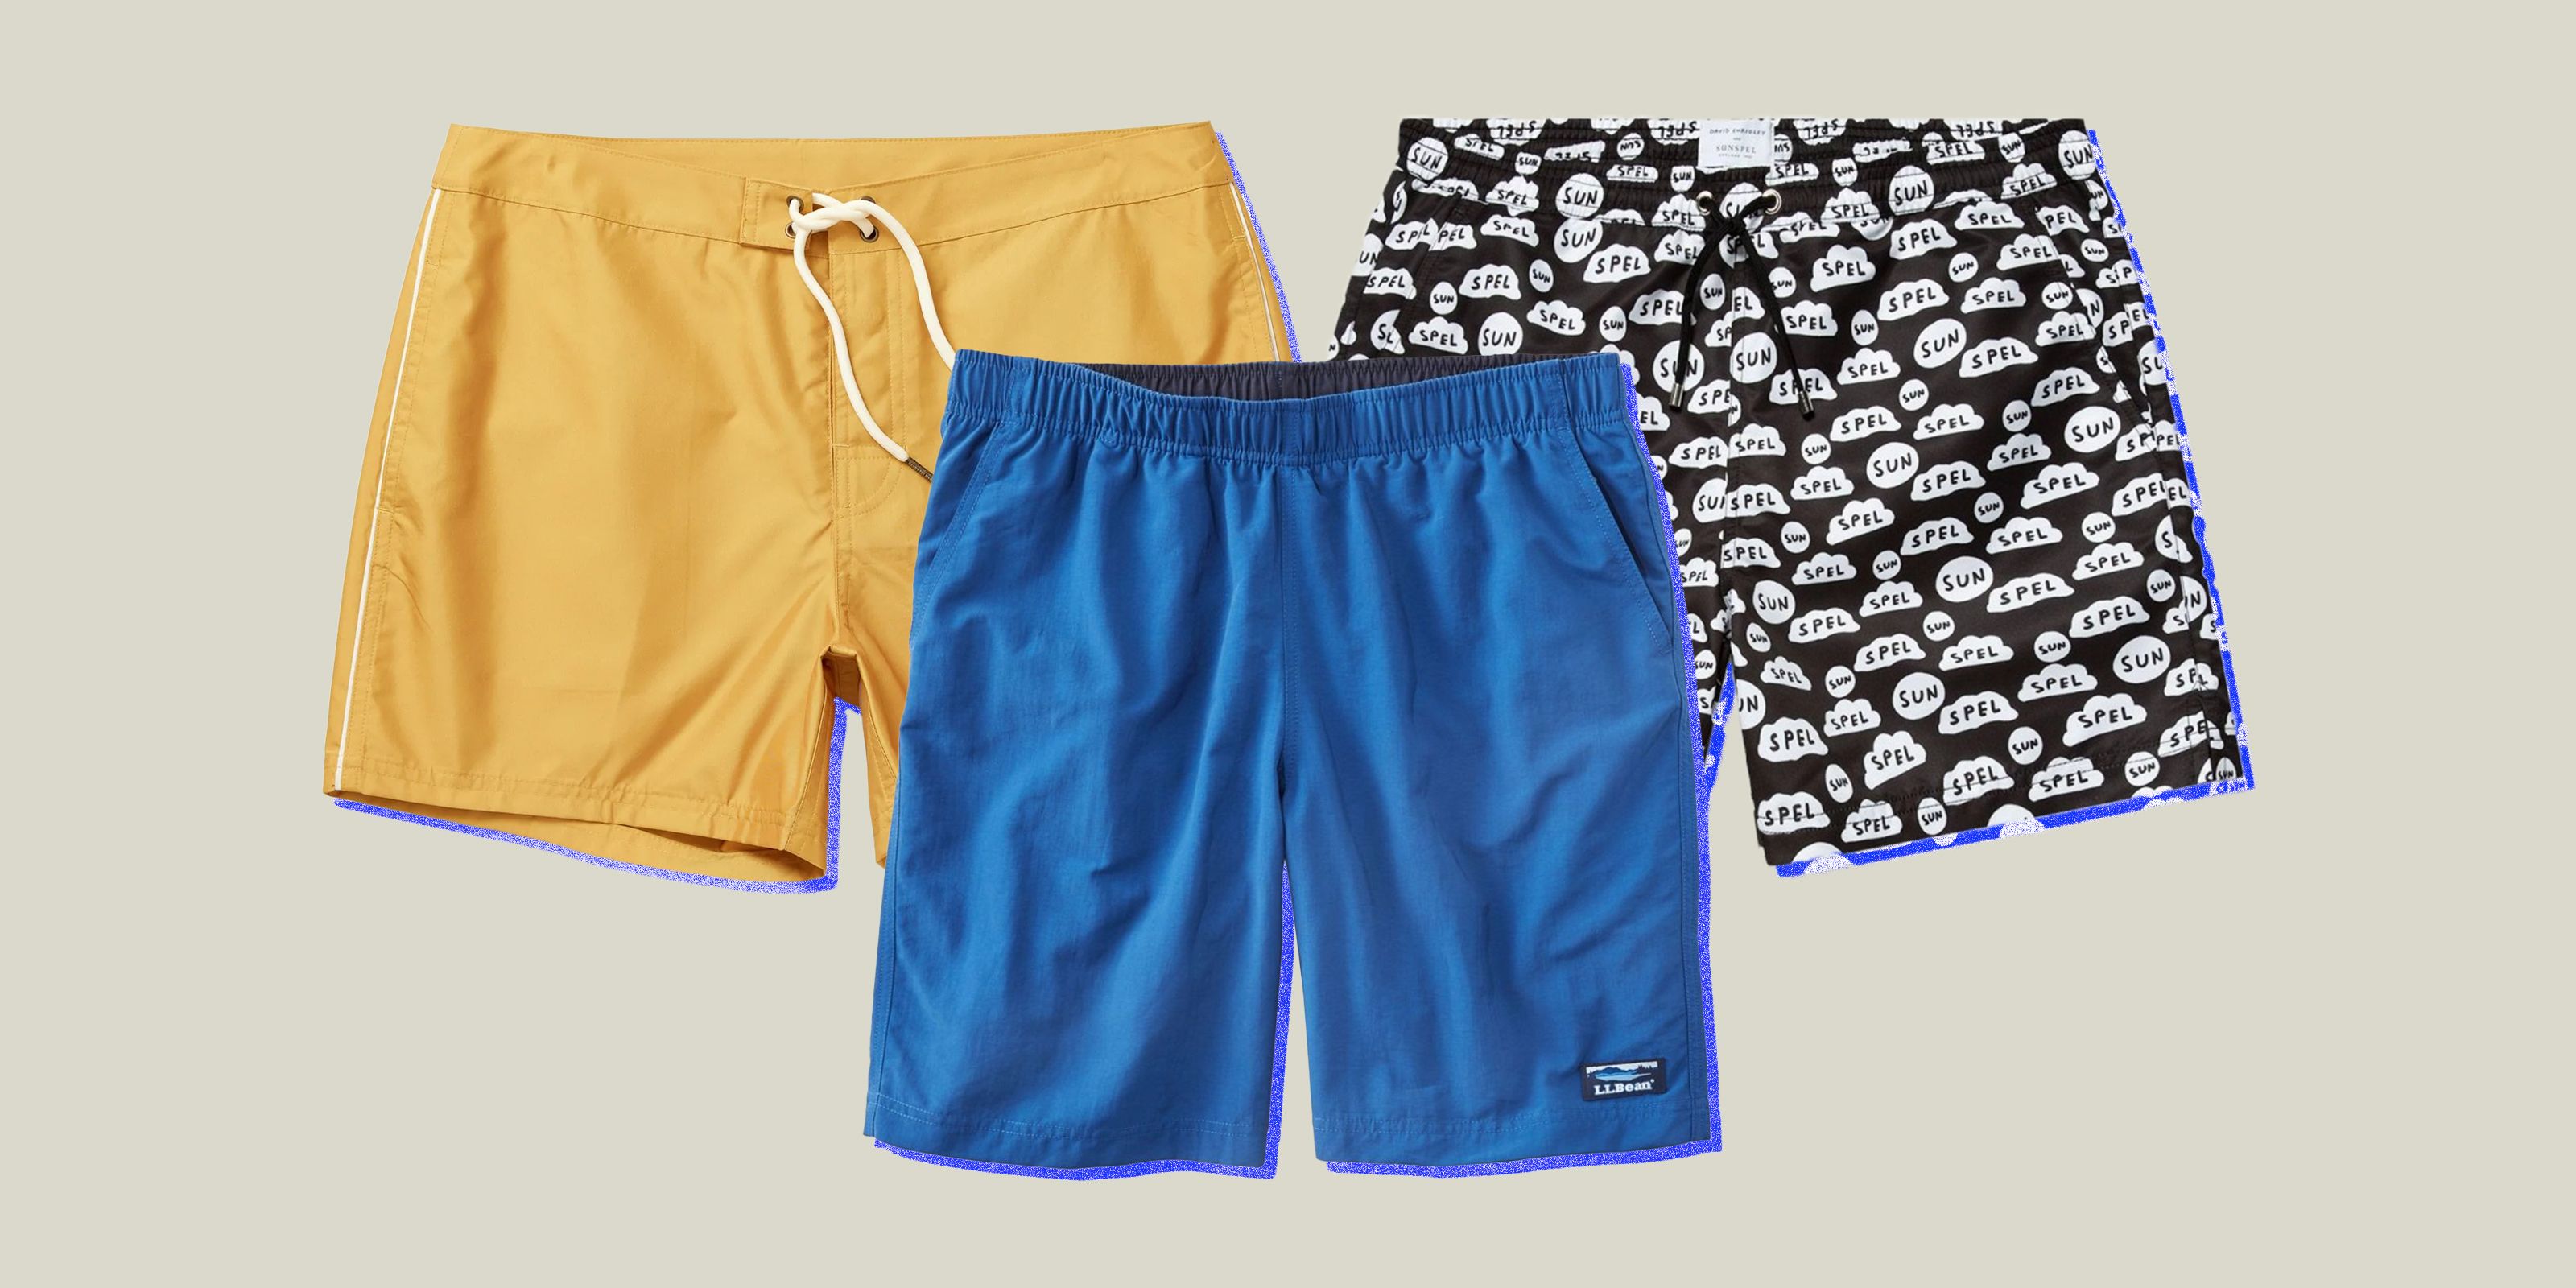 VATPAVE Mens Swim Trunks Summer Board Shorts Casual Drawstring Beach Bathing Suit Shorts 